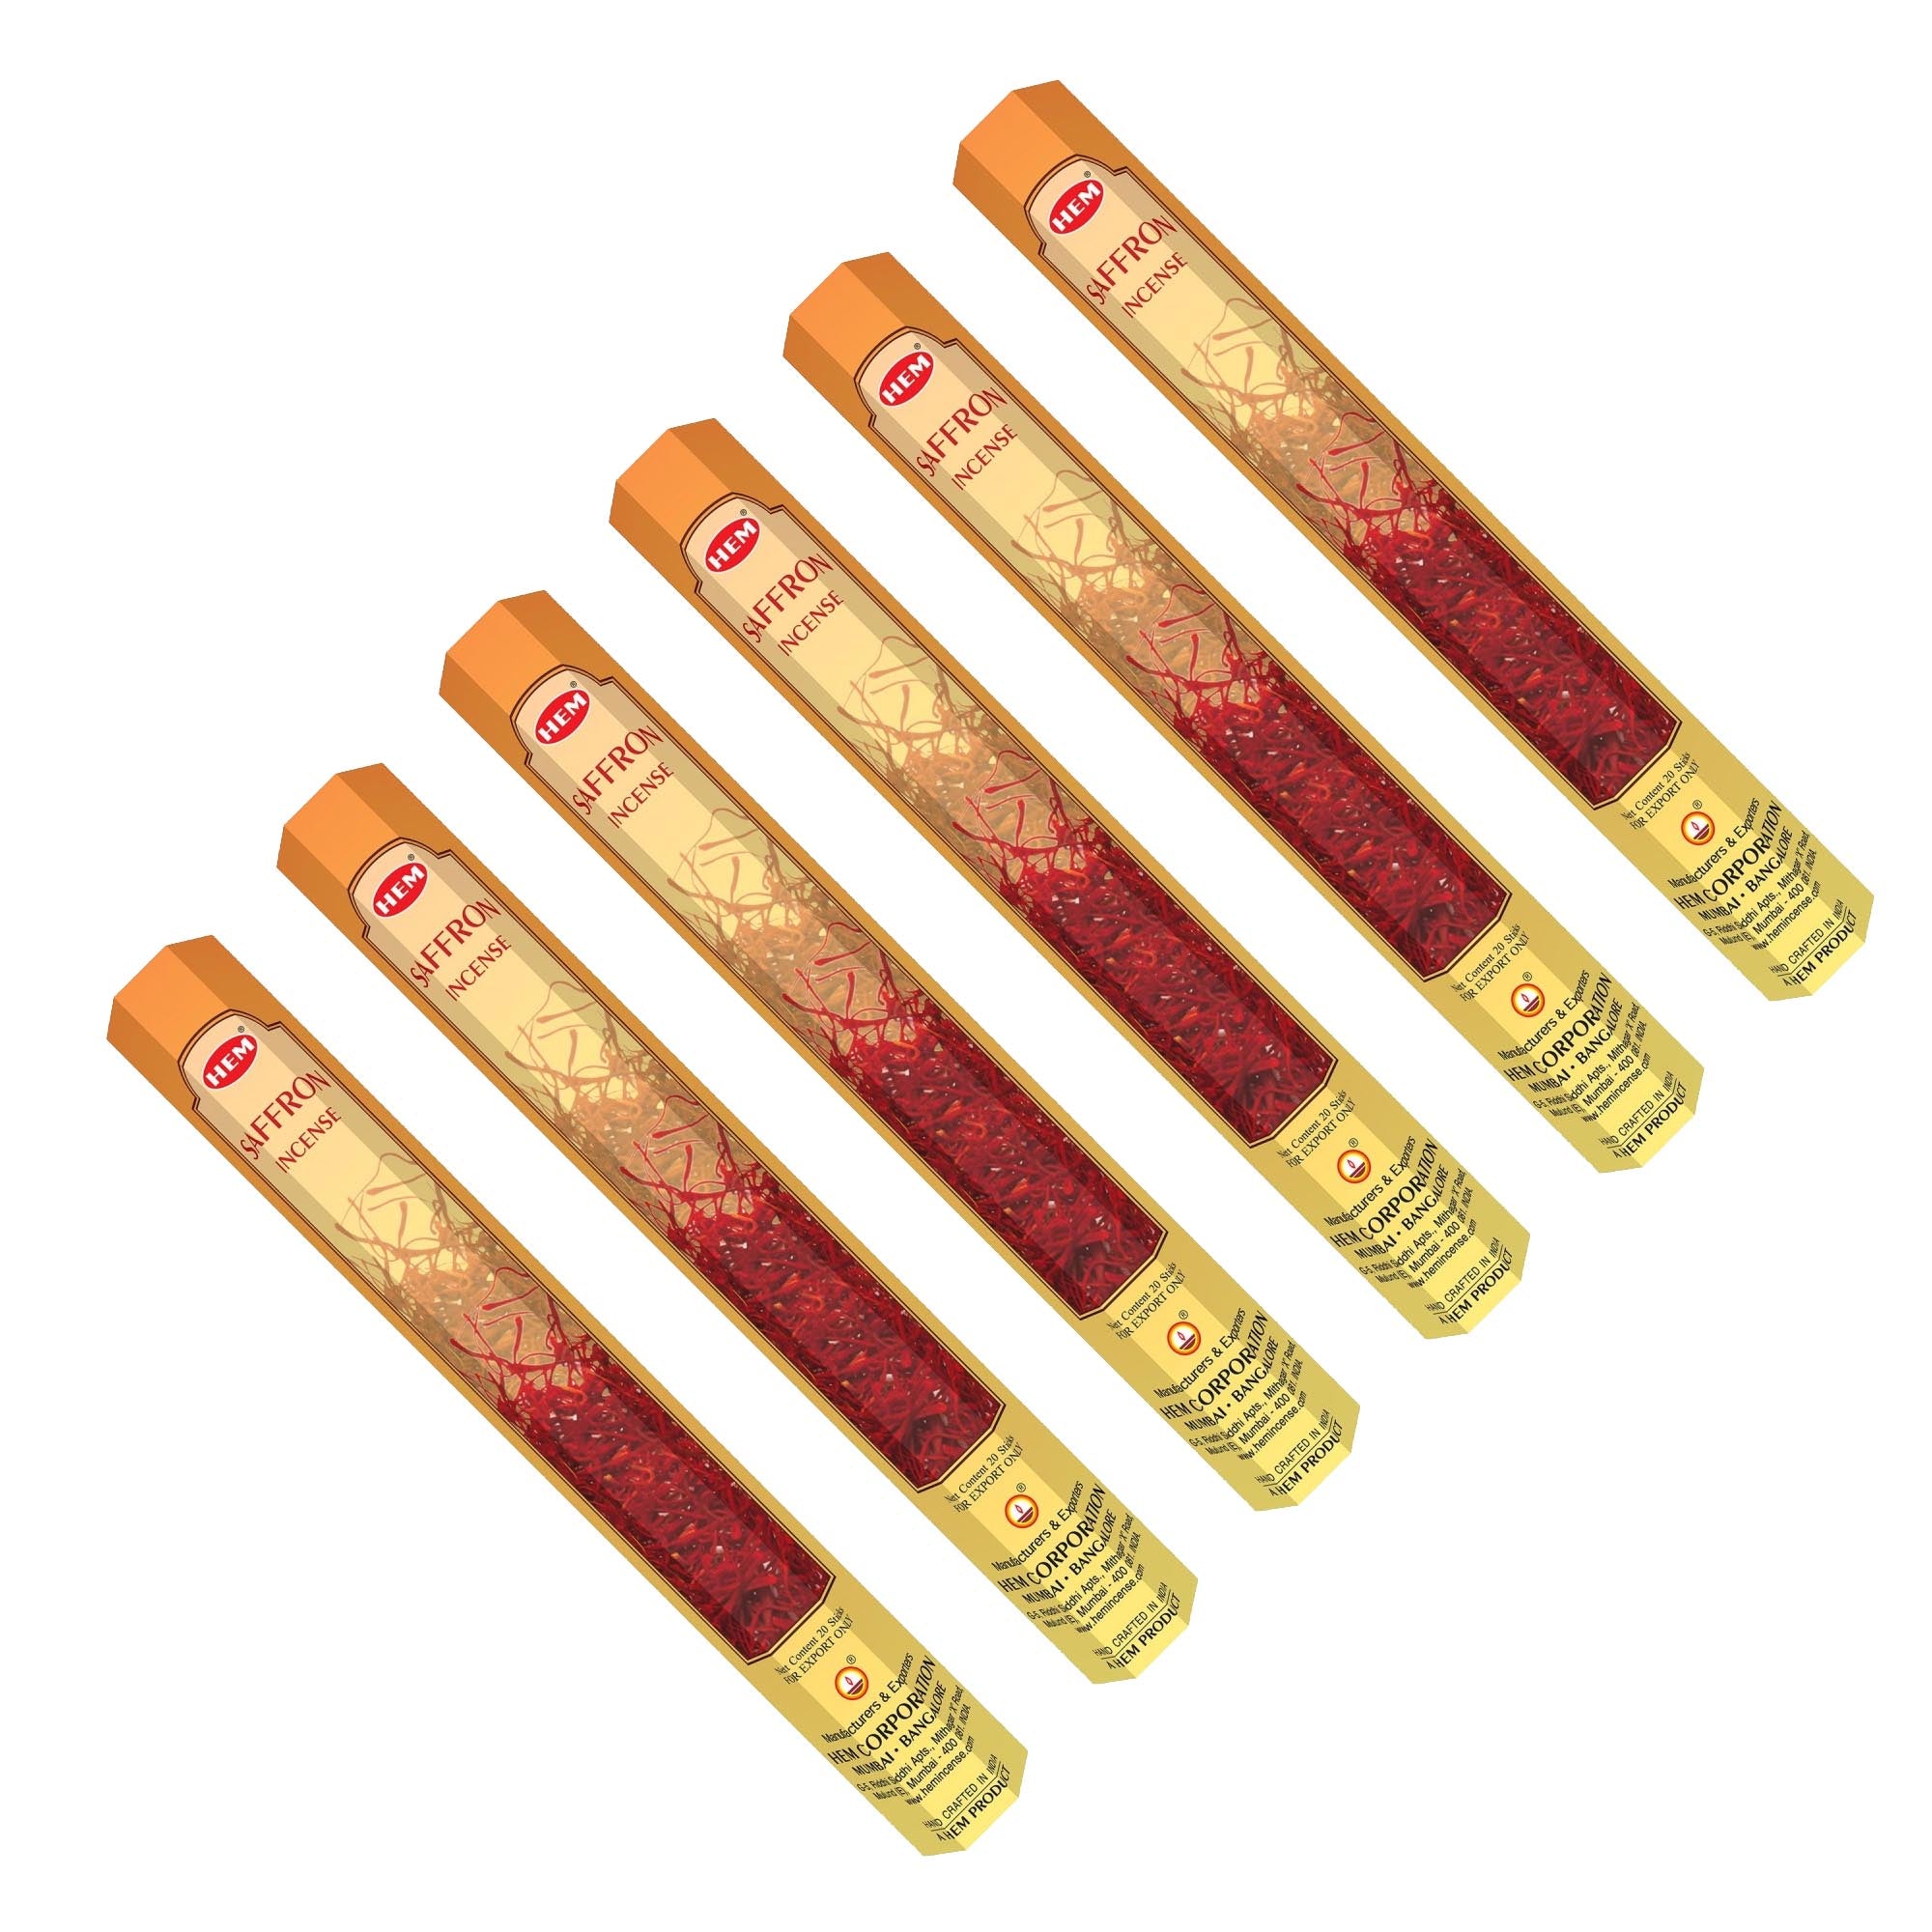 HEM - Hexagon - Saffron Incense Sticks